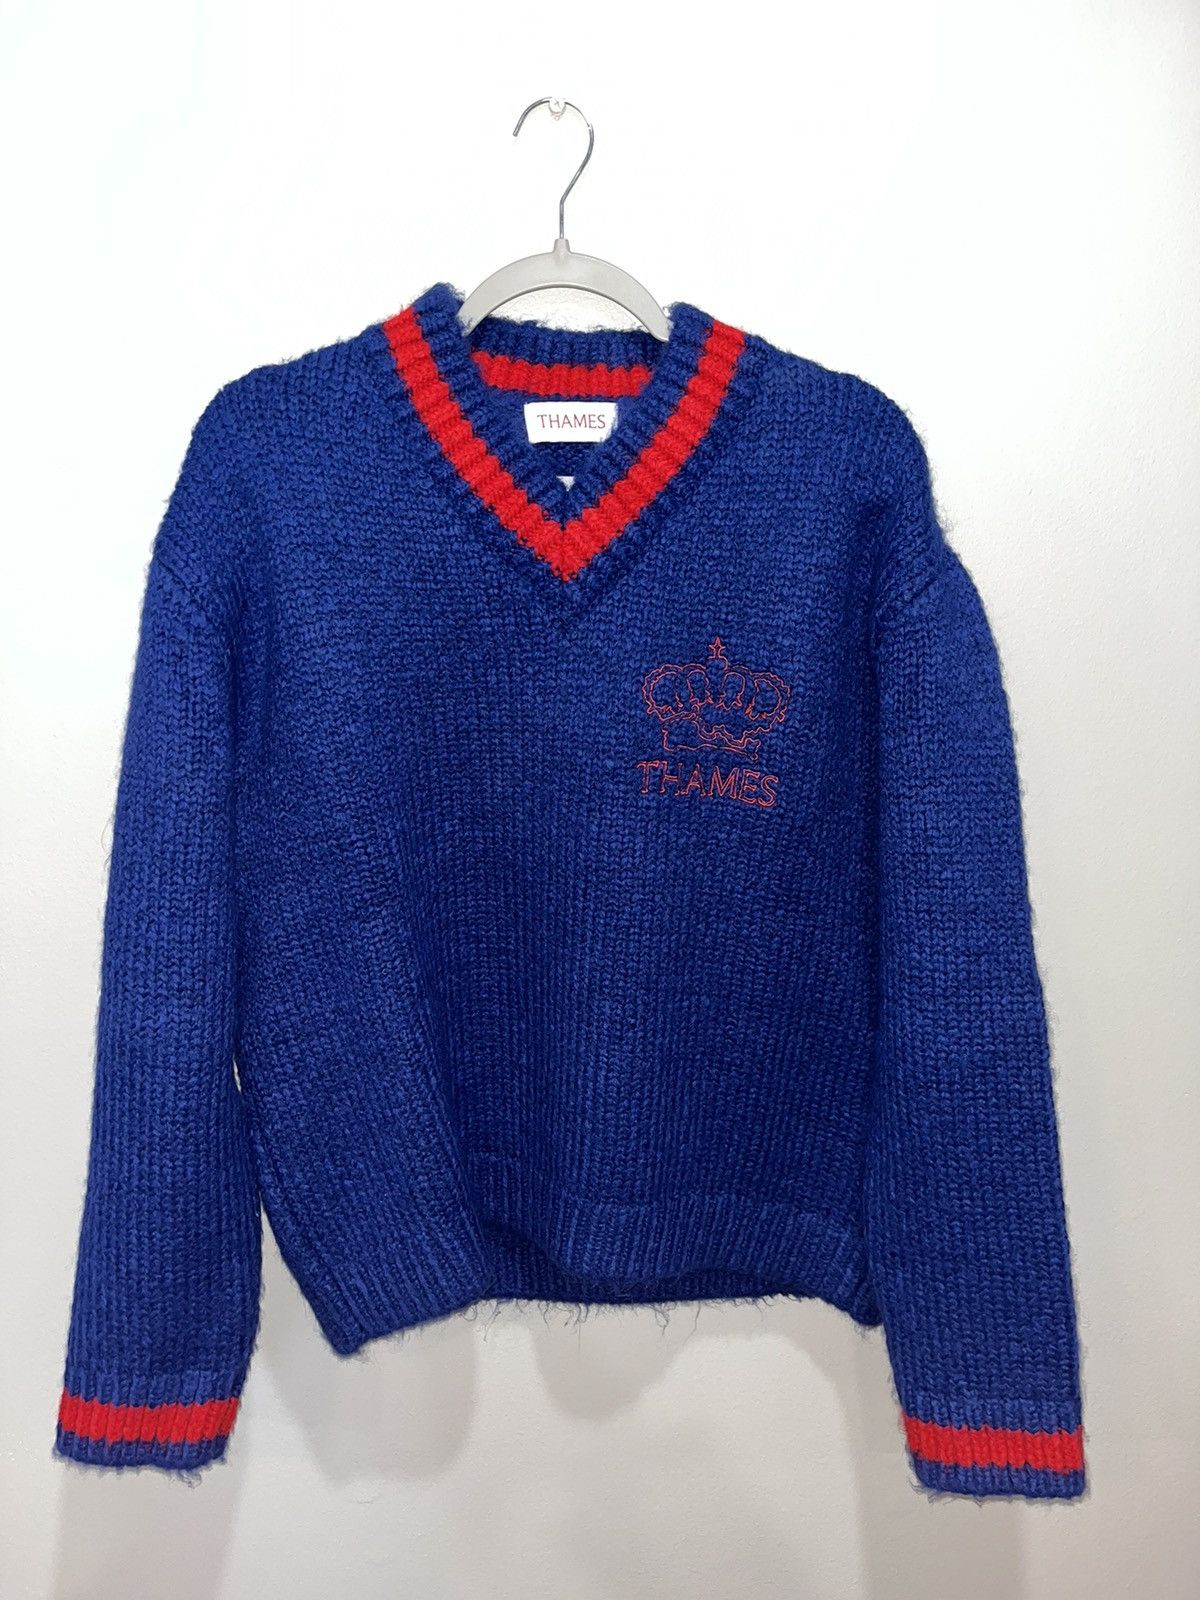 Thames MMXX. Thames Sweater | Grailed